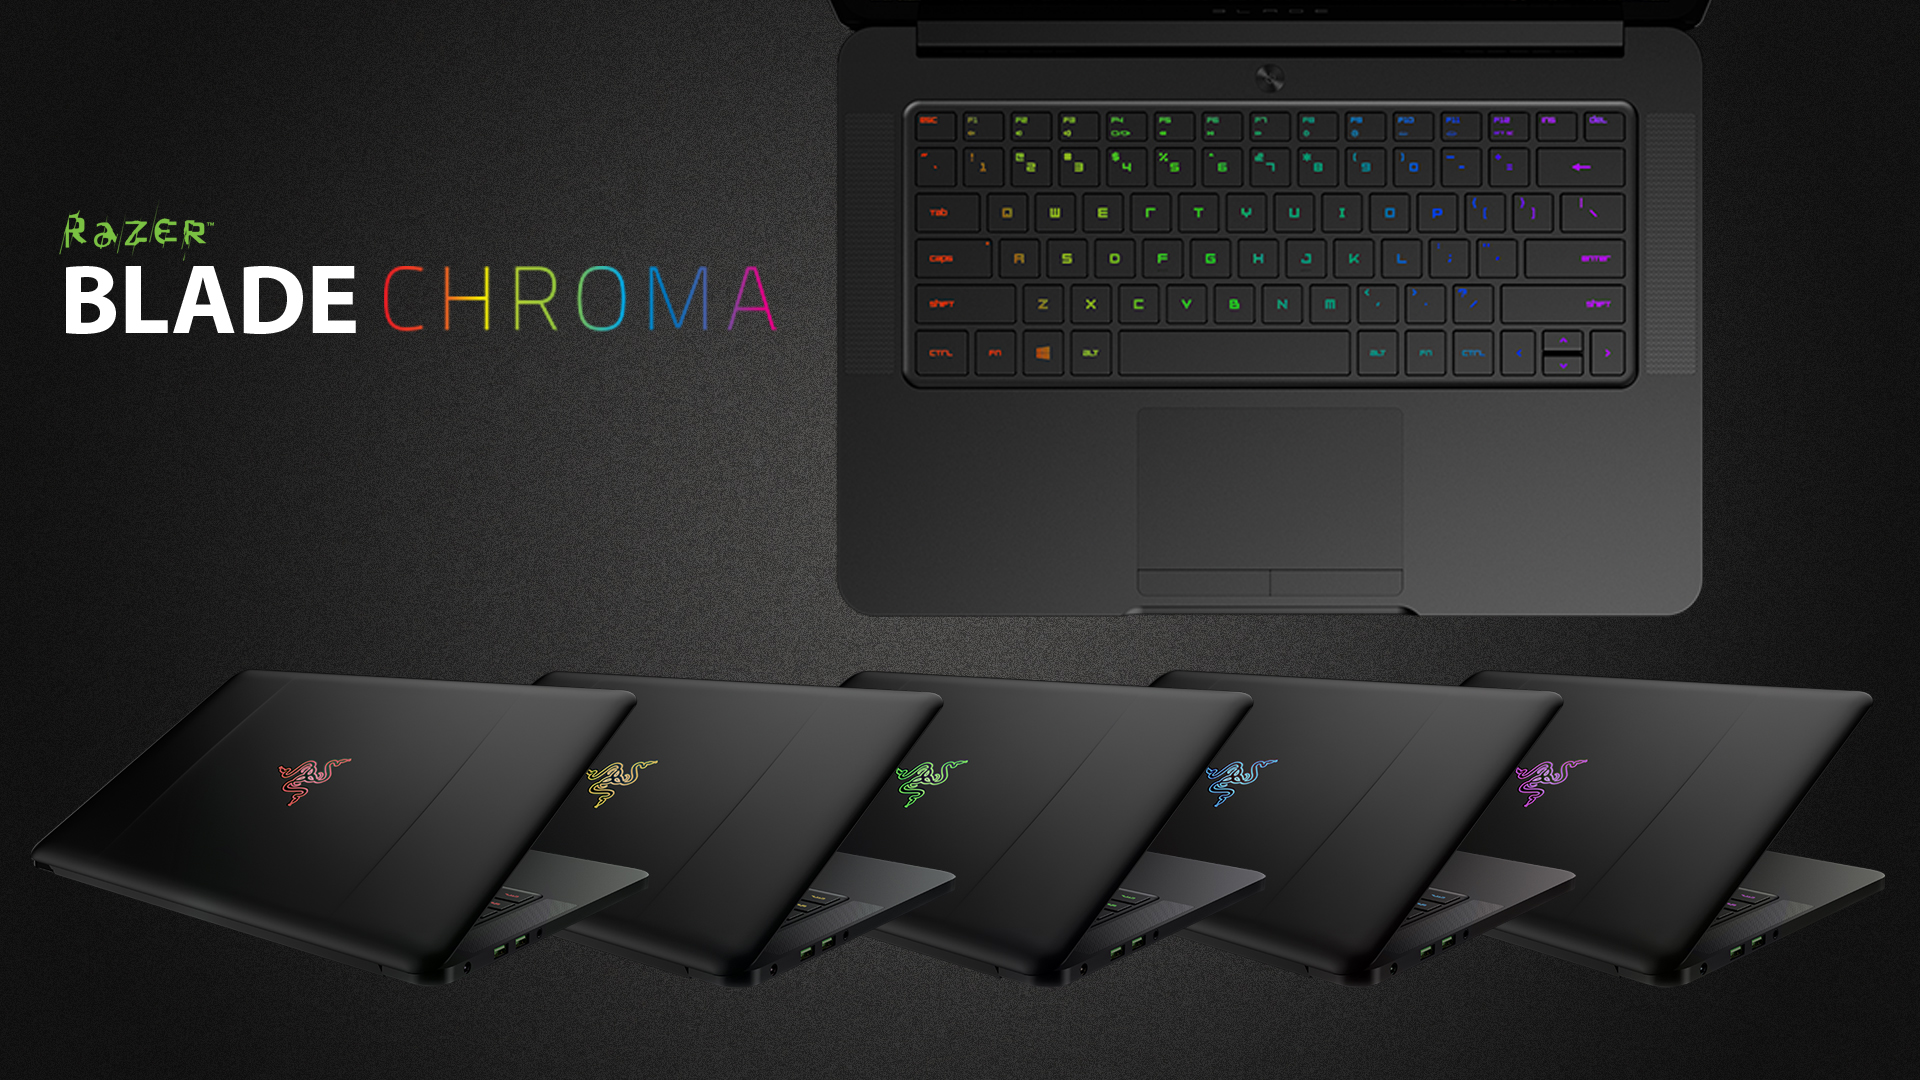 Razer Blade laptop with Chroma keyboard